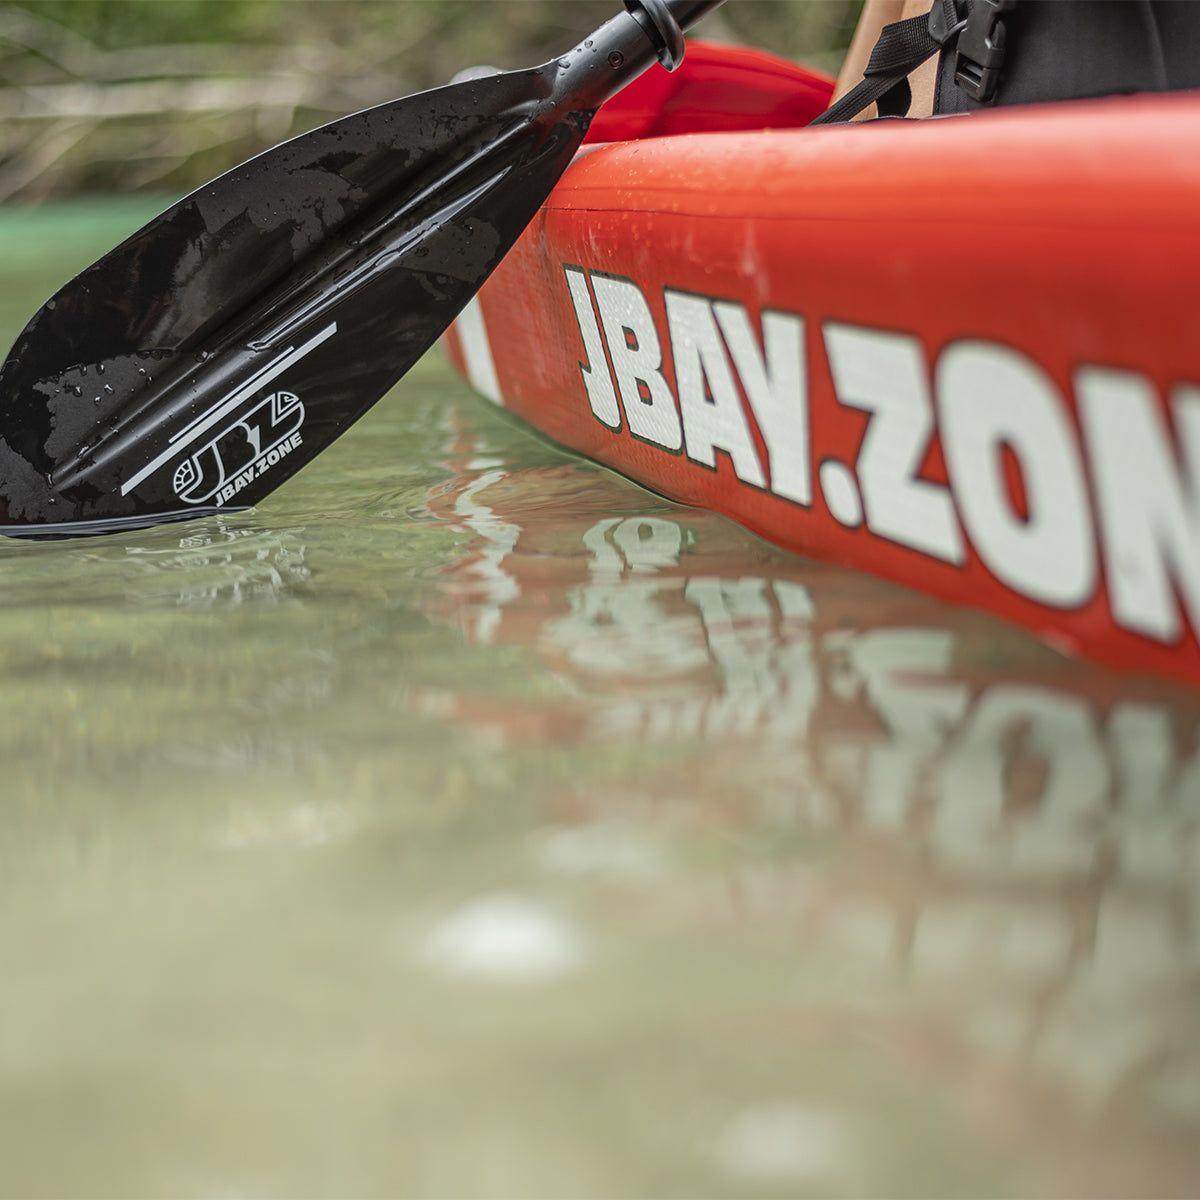 Kayak Canoa Gonfiabile Monoposto JBAY.ZONE 330